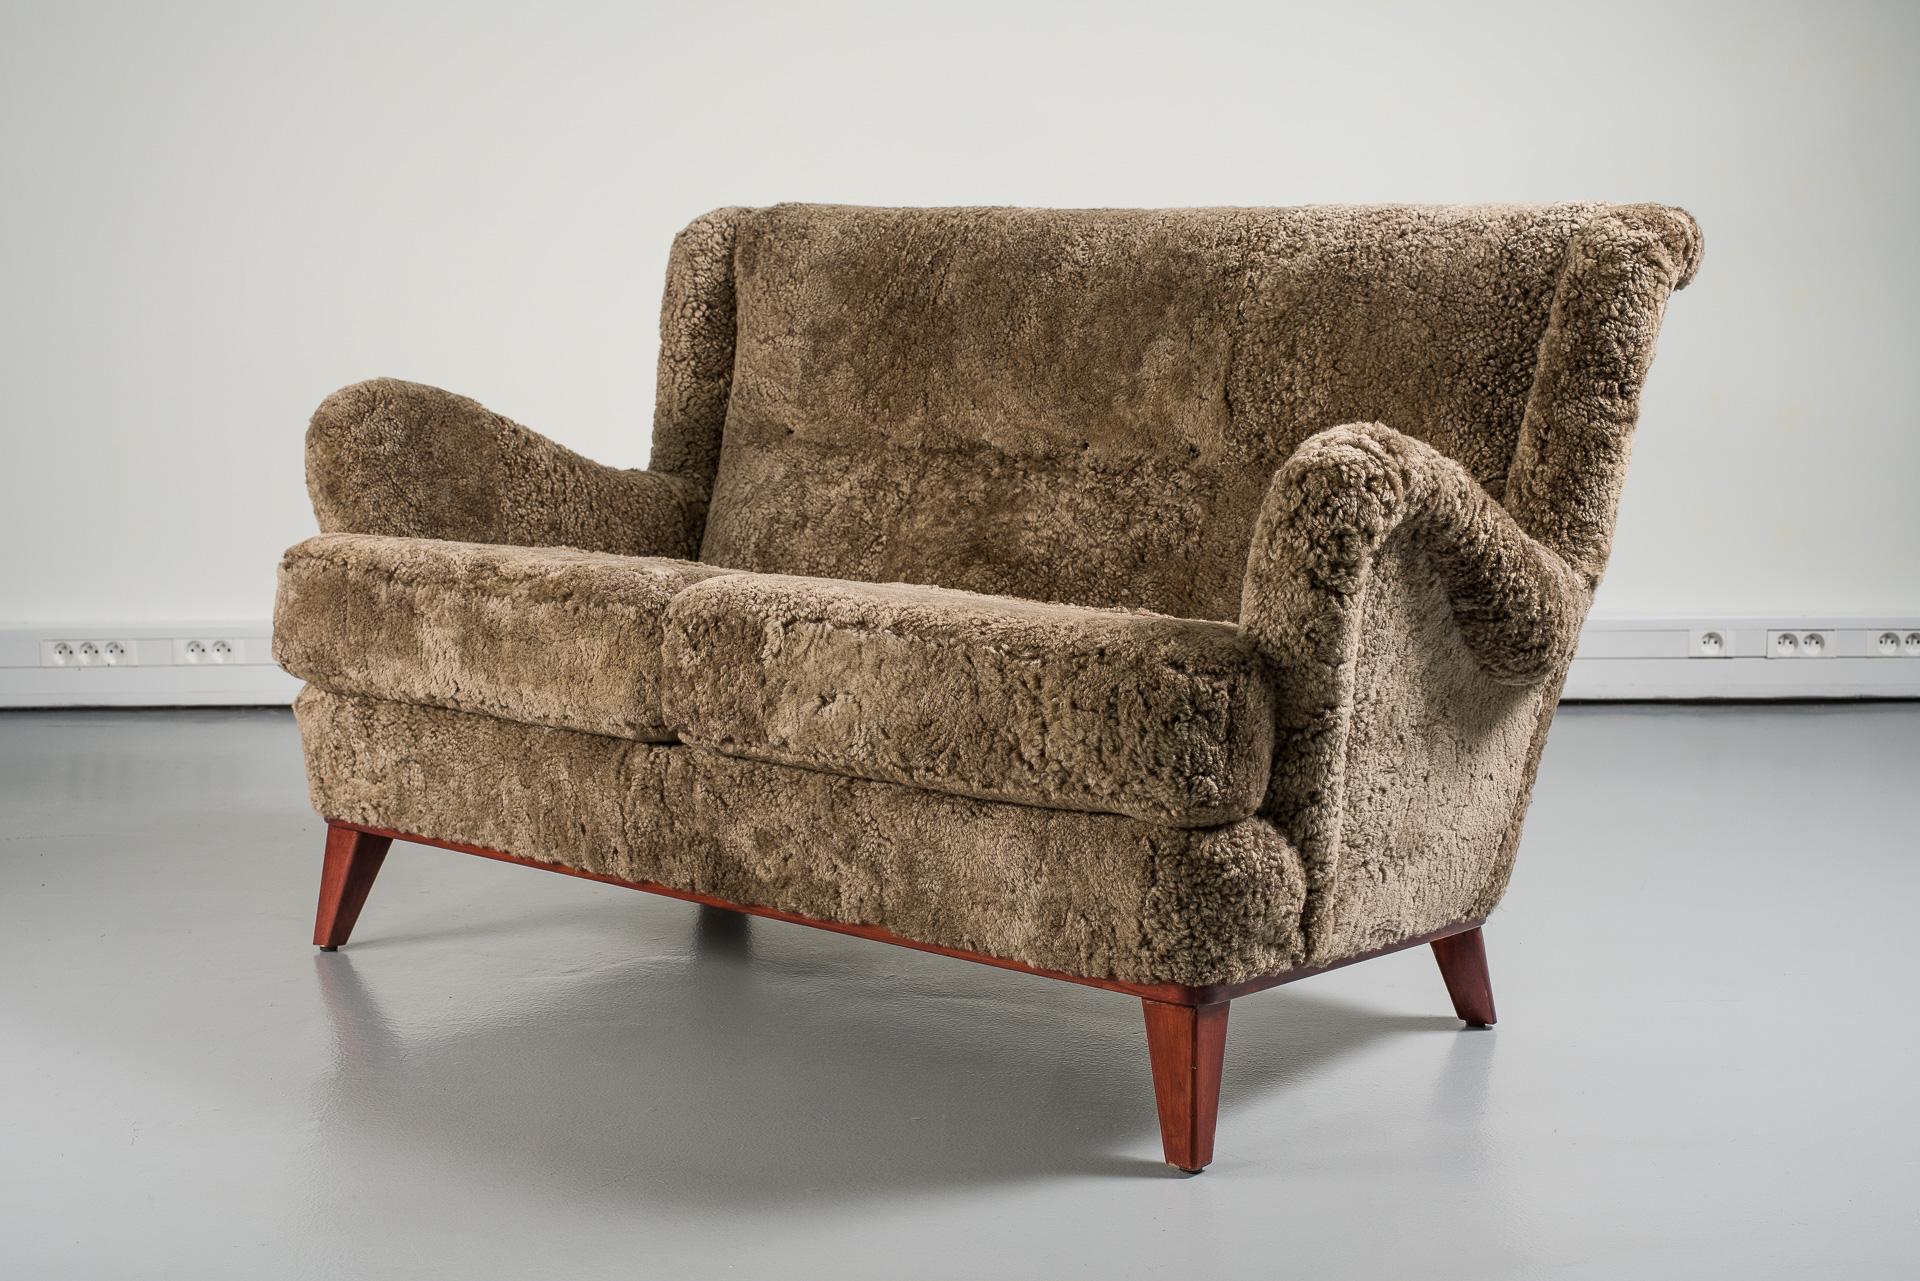 Scandinavian Modern Mid-20th Century Swedish Sofa, Curly Lambskin Upholstery